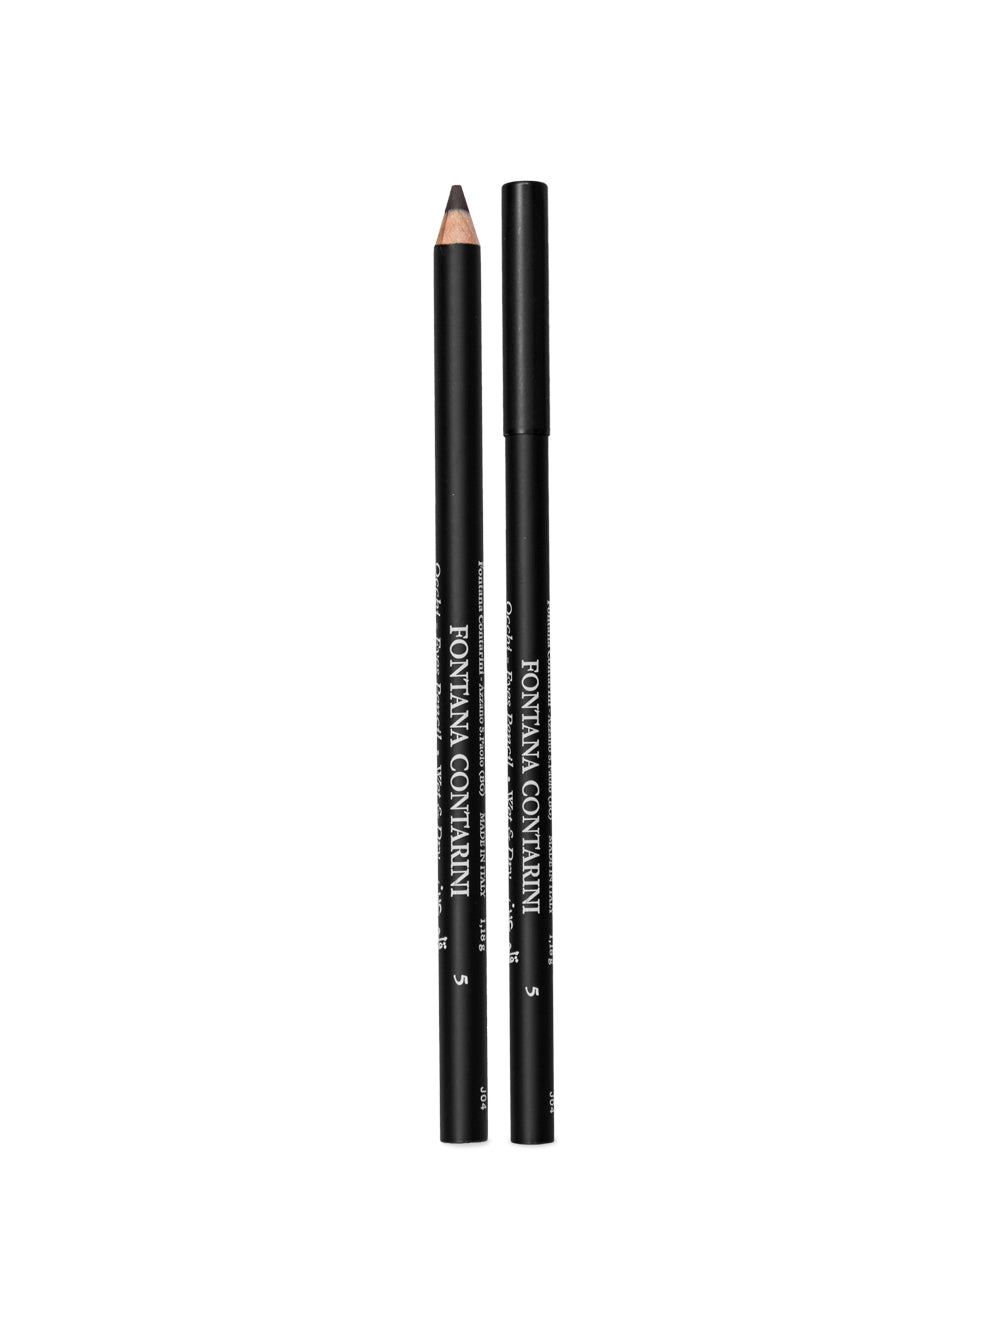 Wet & Dry Eyeliner Pencil - Pearl White